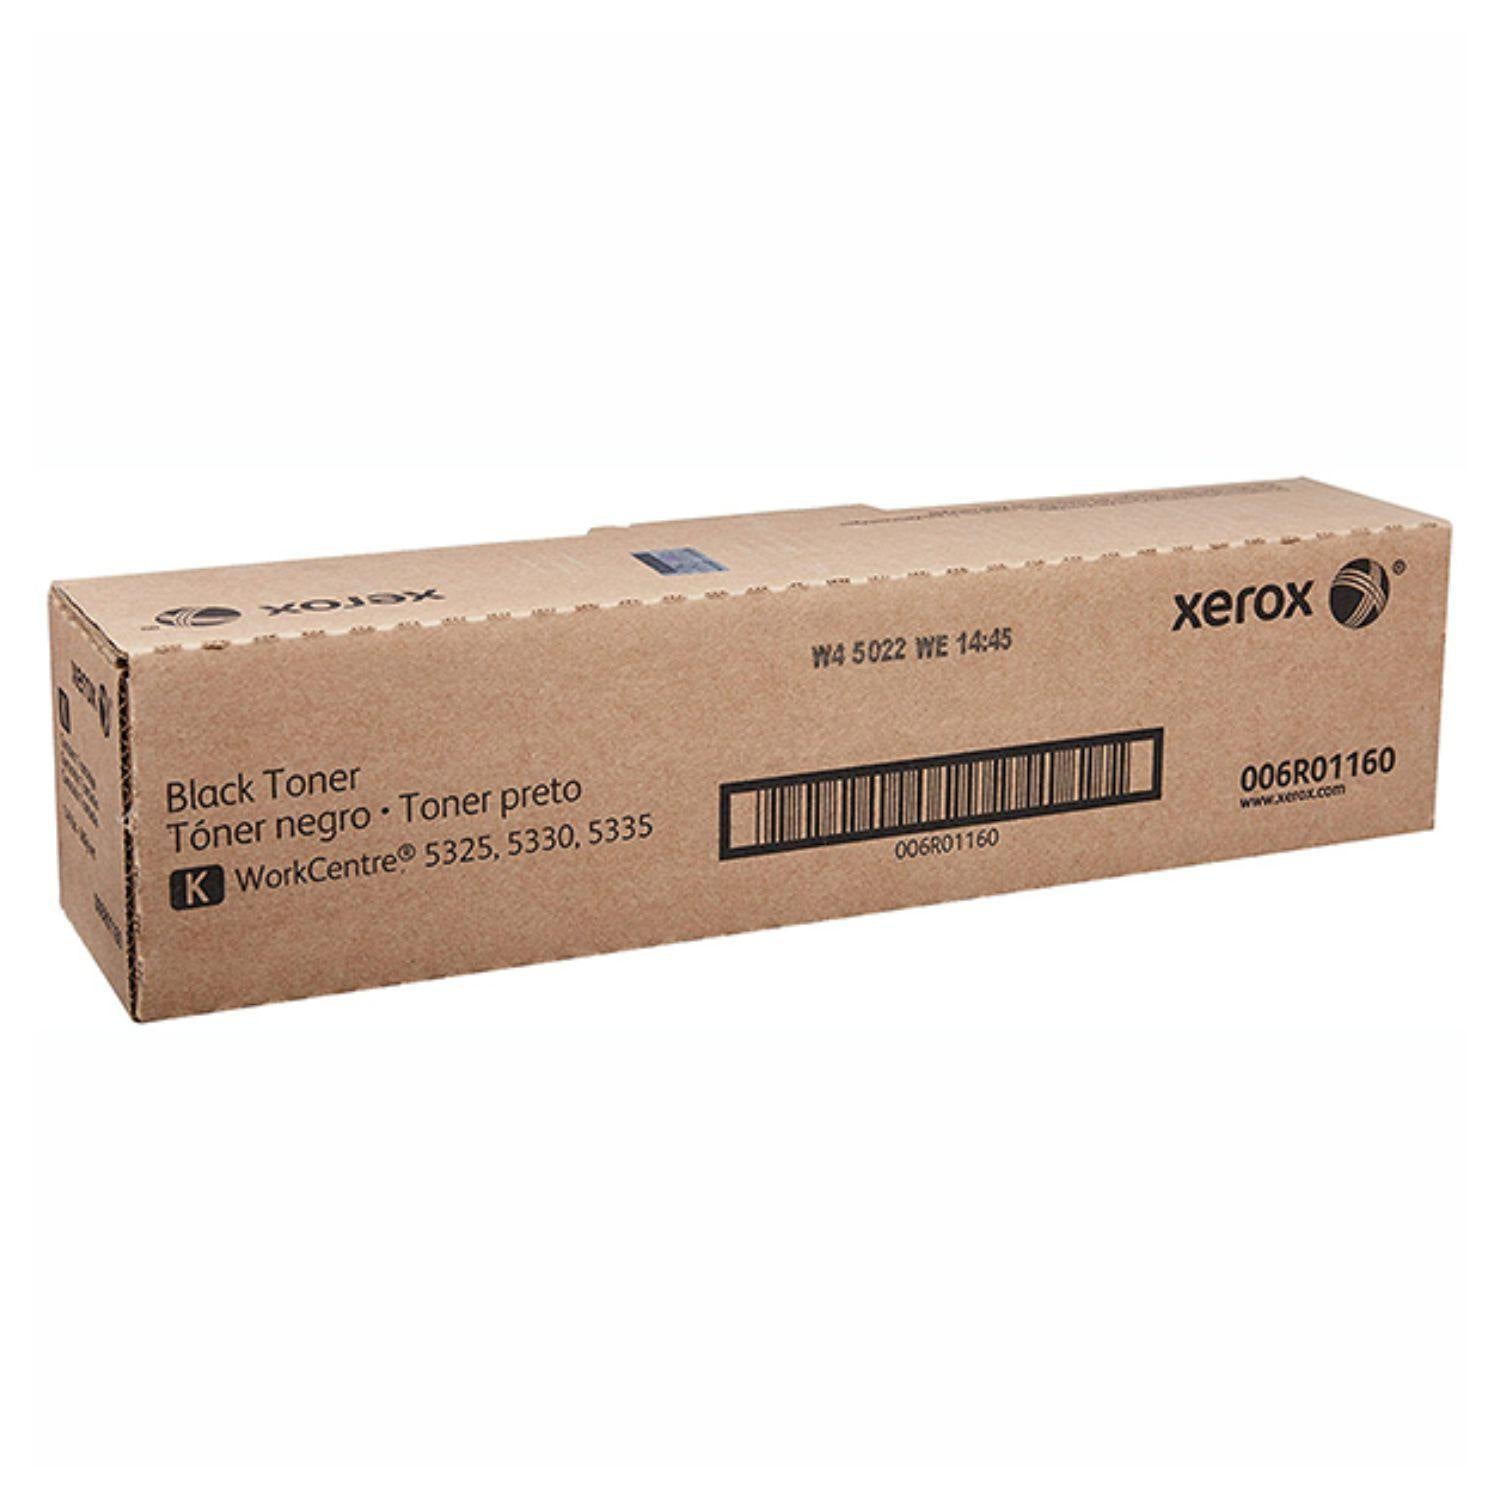 Toner Xerox 006R01160 - Black - PERU DATA